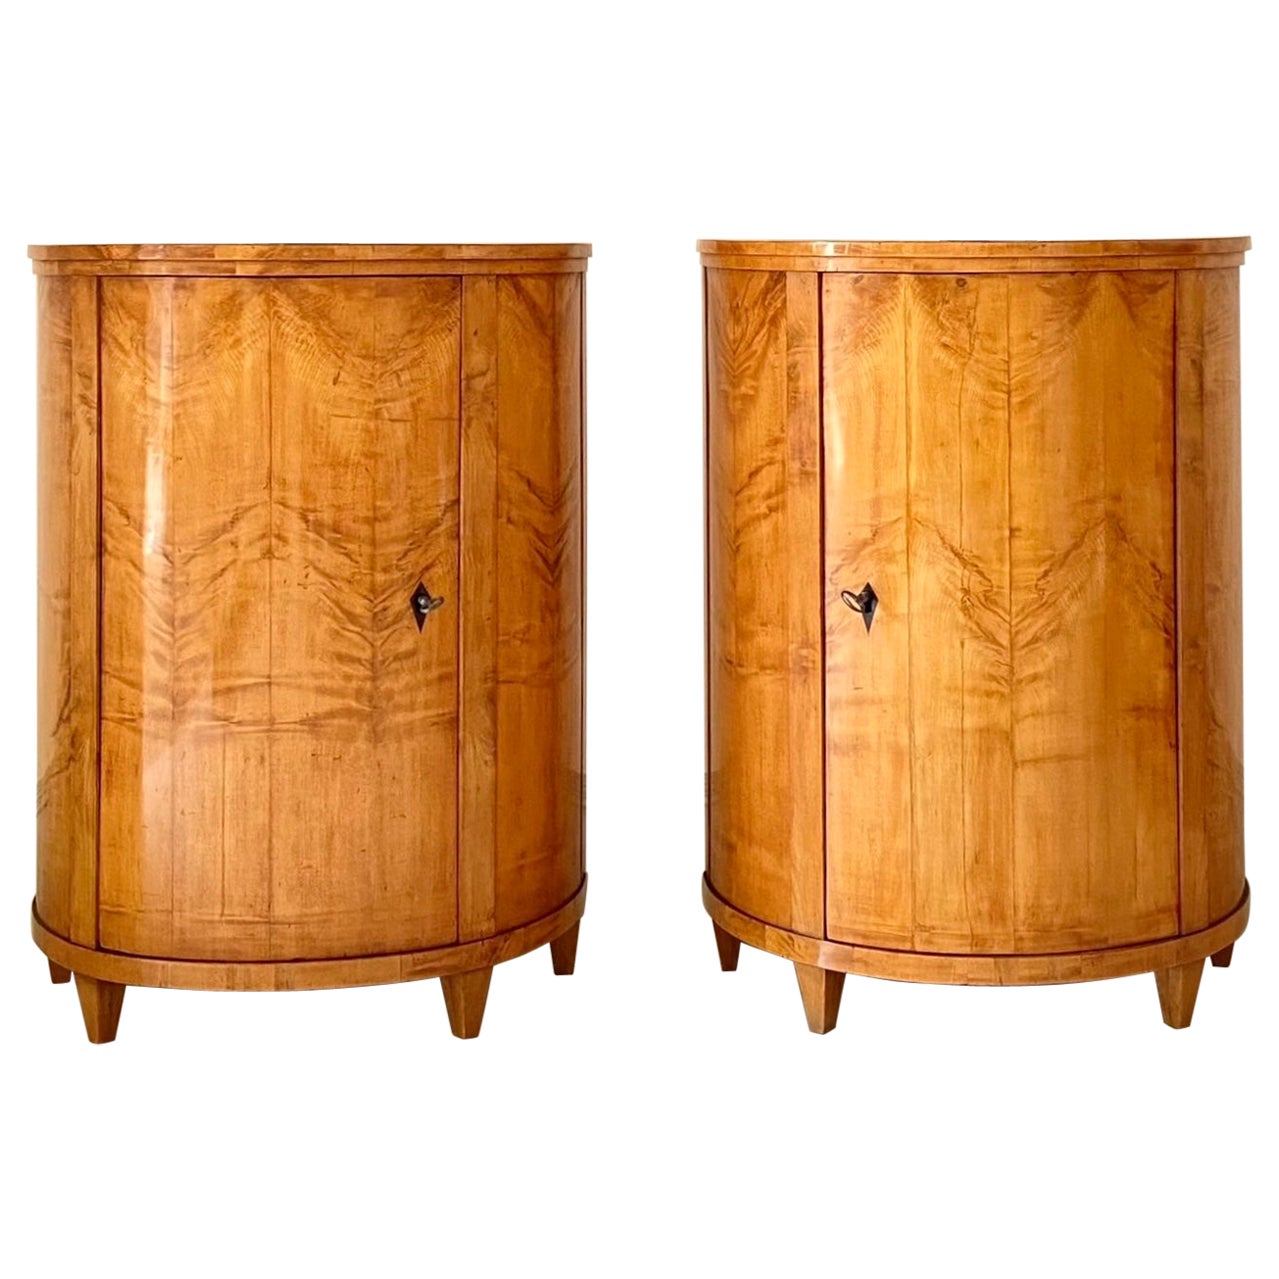 Pair of early 19th Century Biedermeier Maple Demi-lune Side Cabinets.